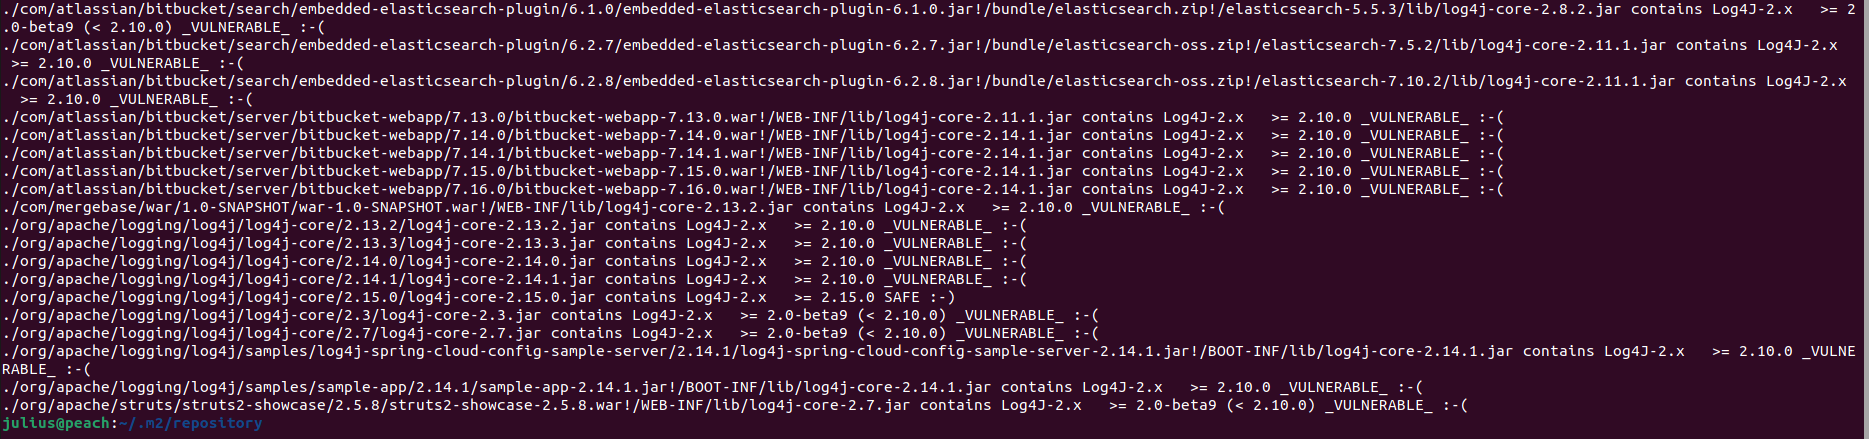 Terminal output from running java -jar log4j-detector.jar in a terminal